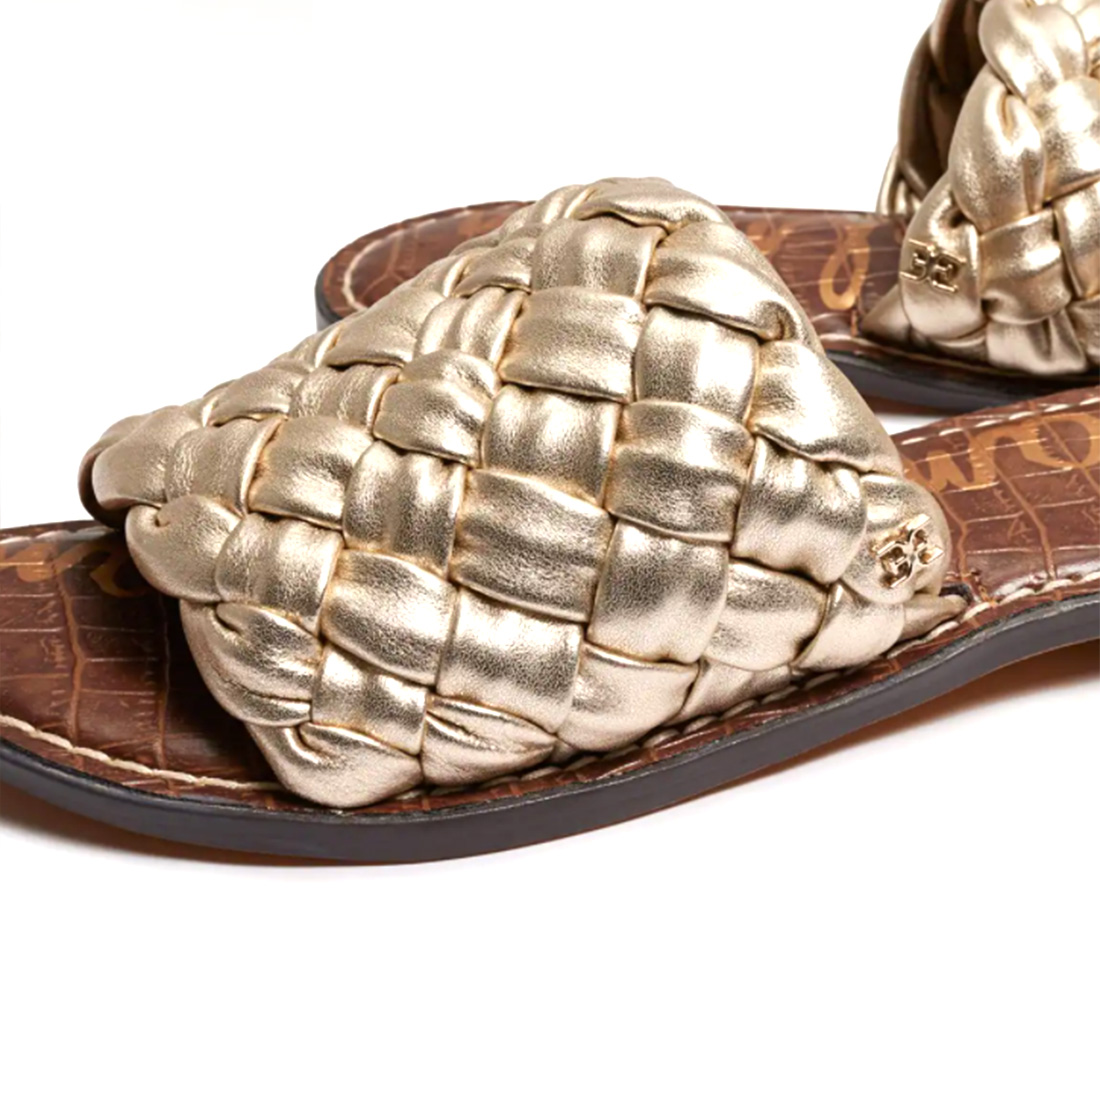 sam edelman griffin woven sandal in gold leaf jute leather 107344